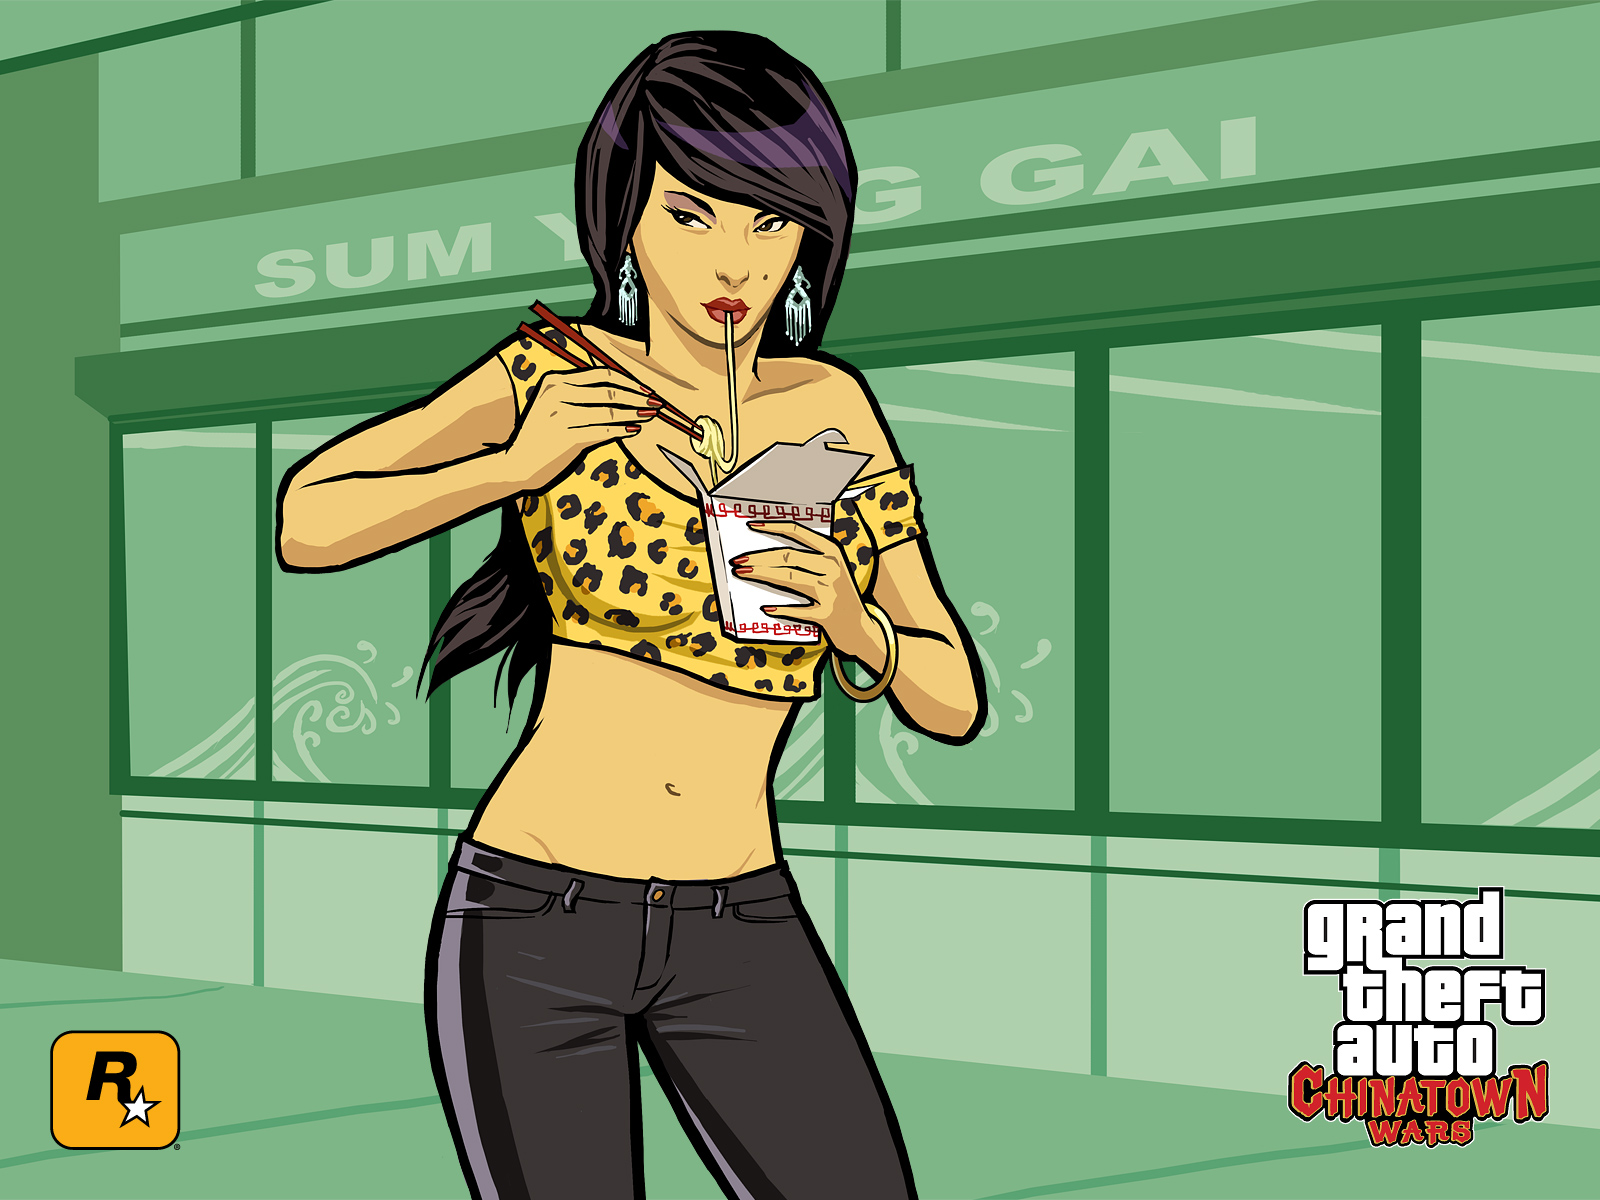 Grand Theft Auto: Chinatown Wars #22